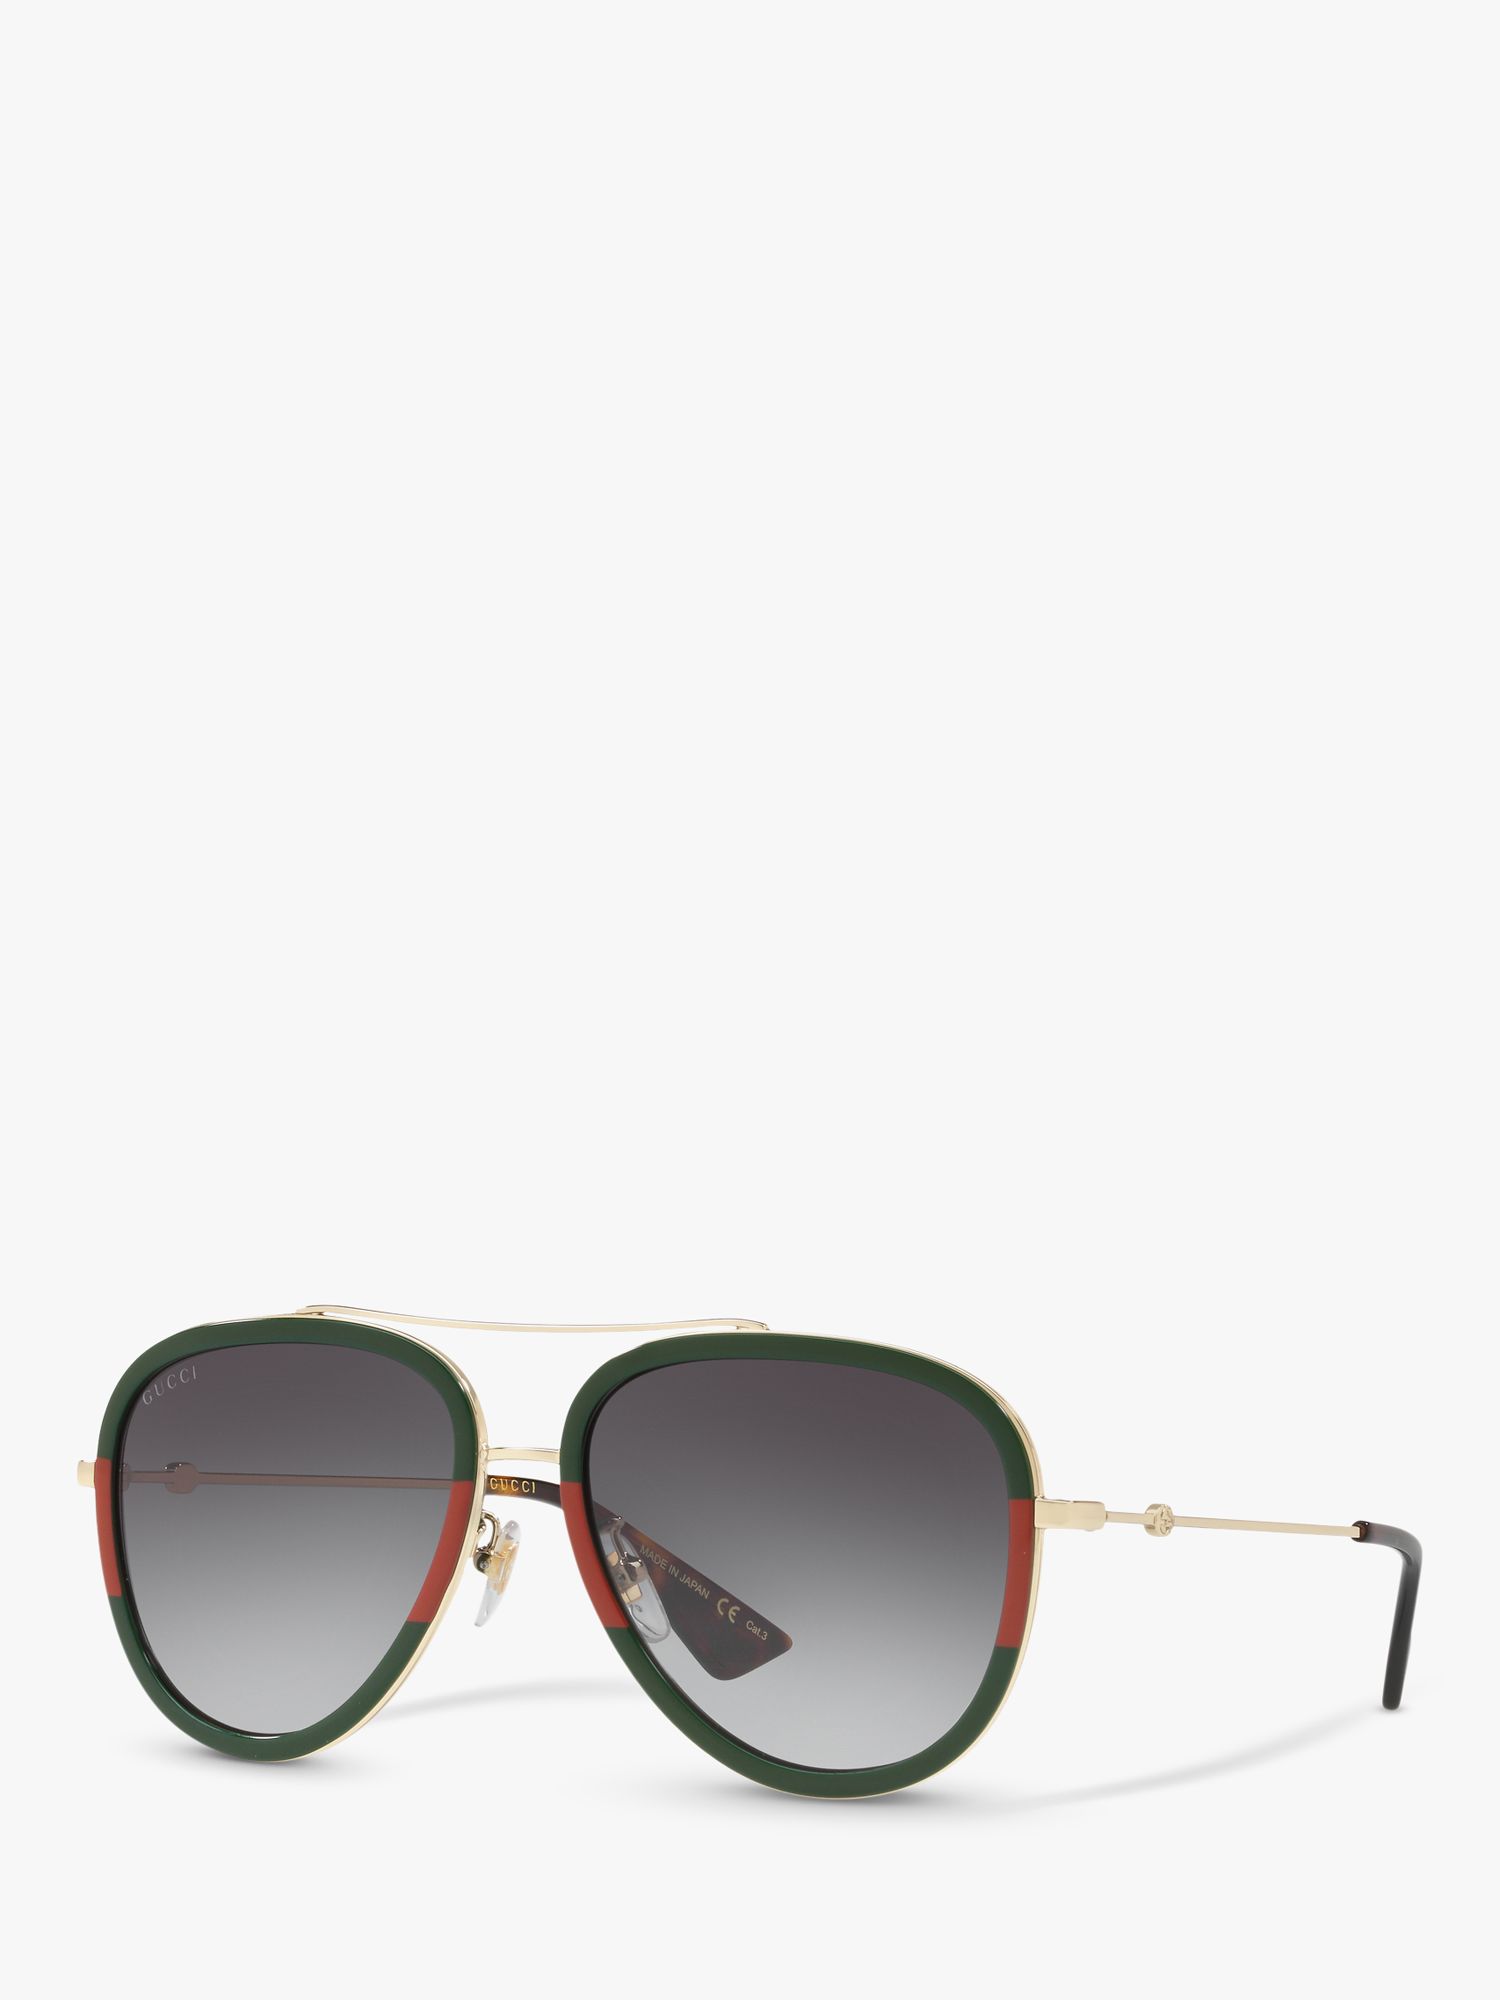 Gucci GG0062S Aviator Sunglasses at John Lewis